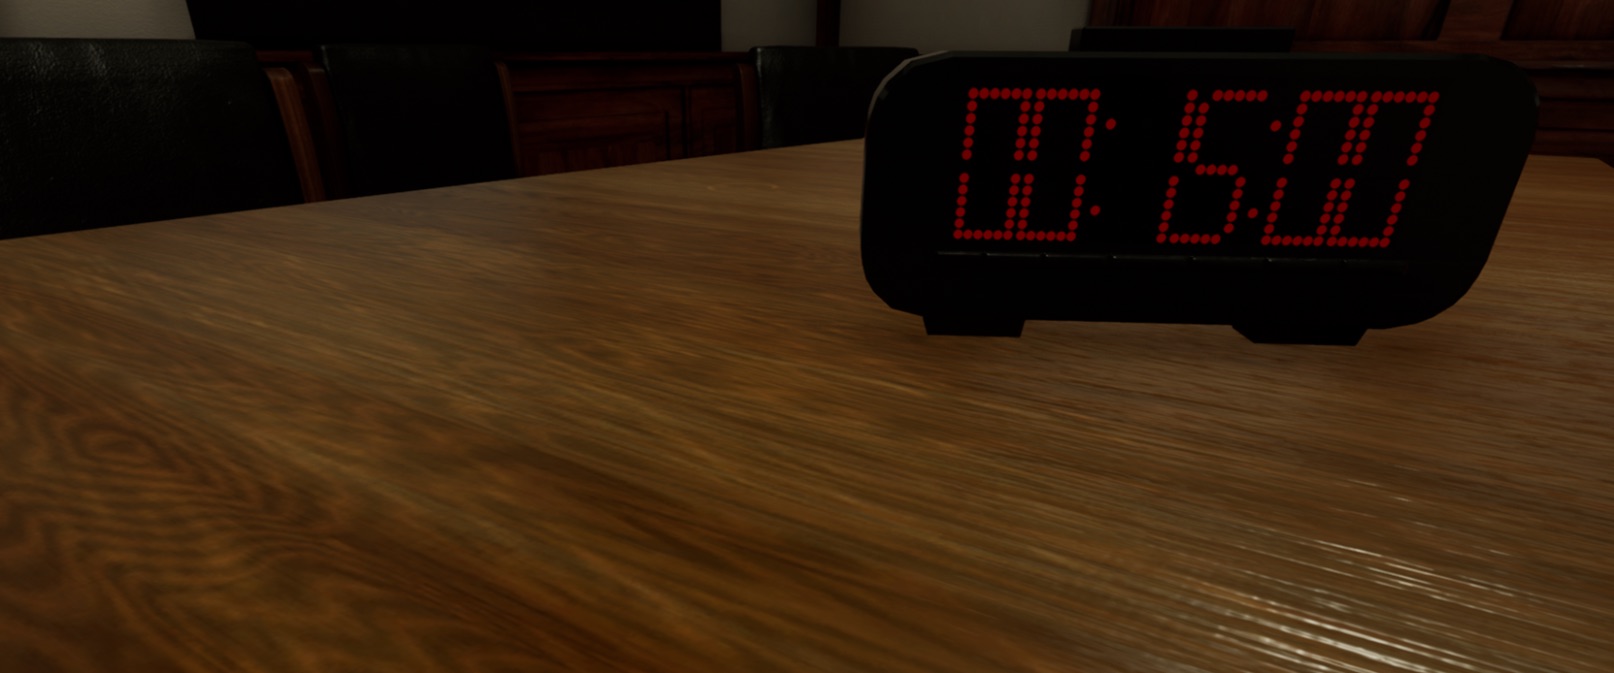 Virtual reality digital clock